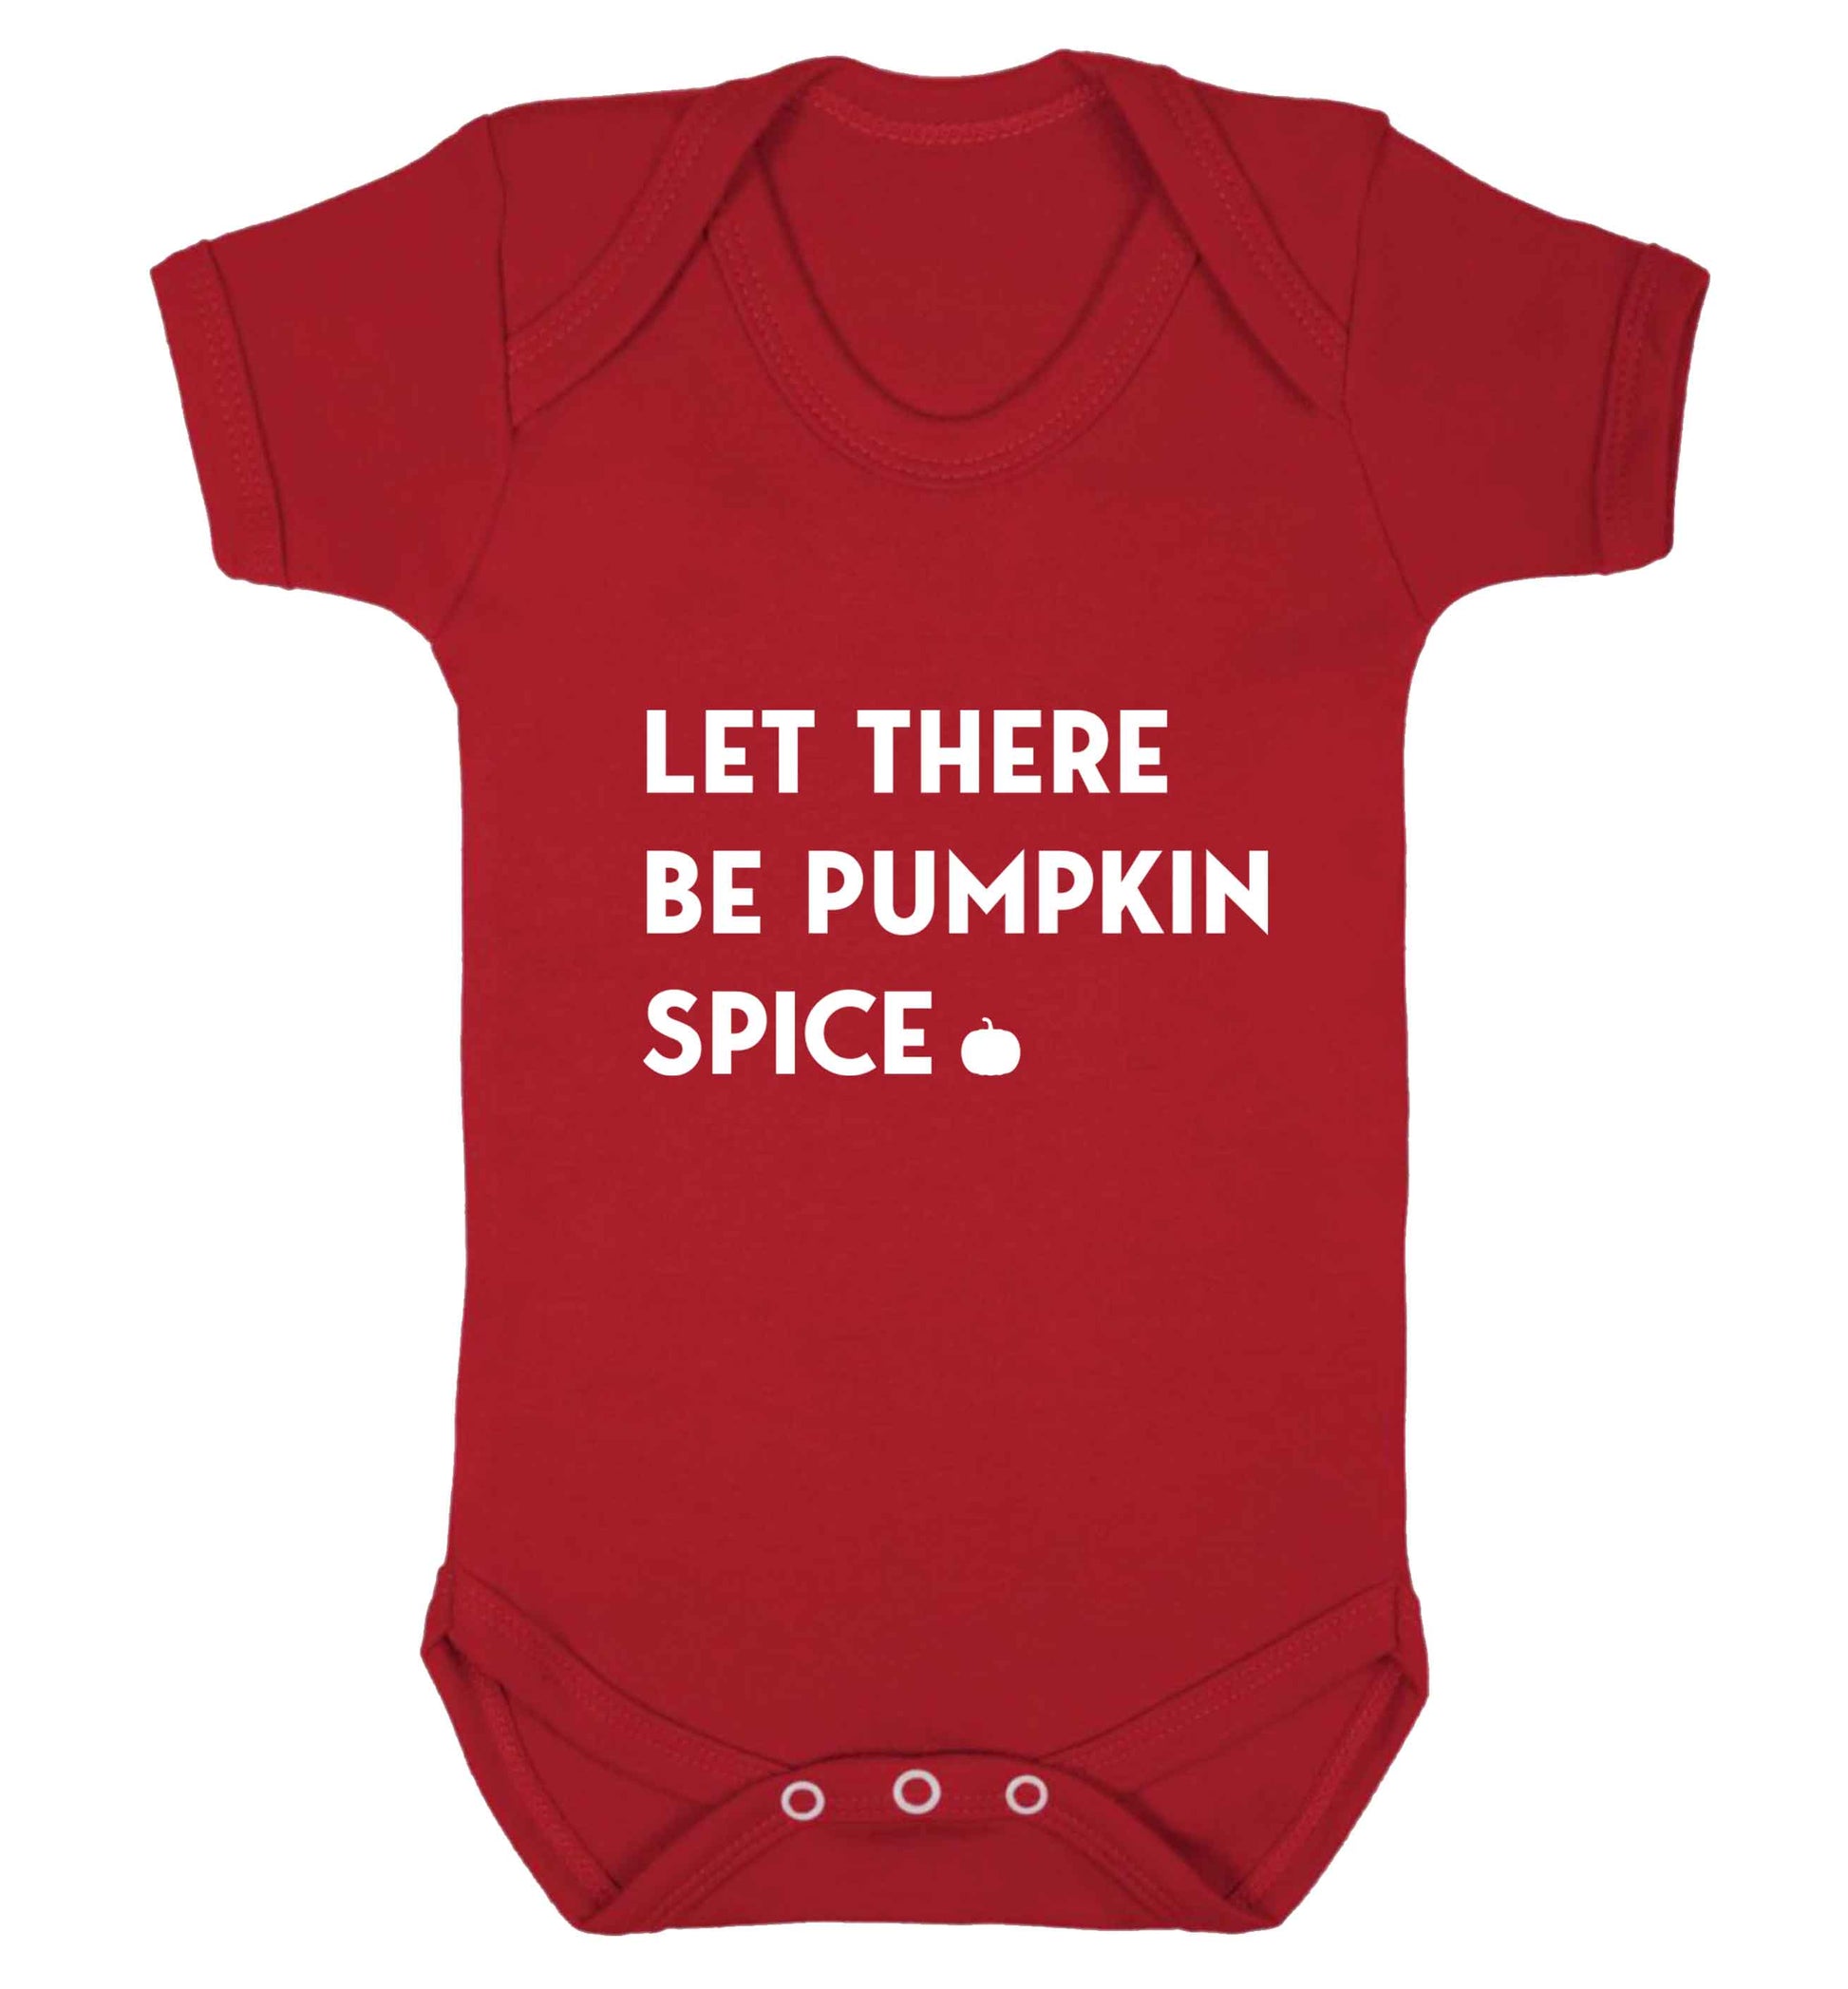 Let Be Pumpkin Spice baby vest red 18-24 months